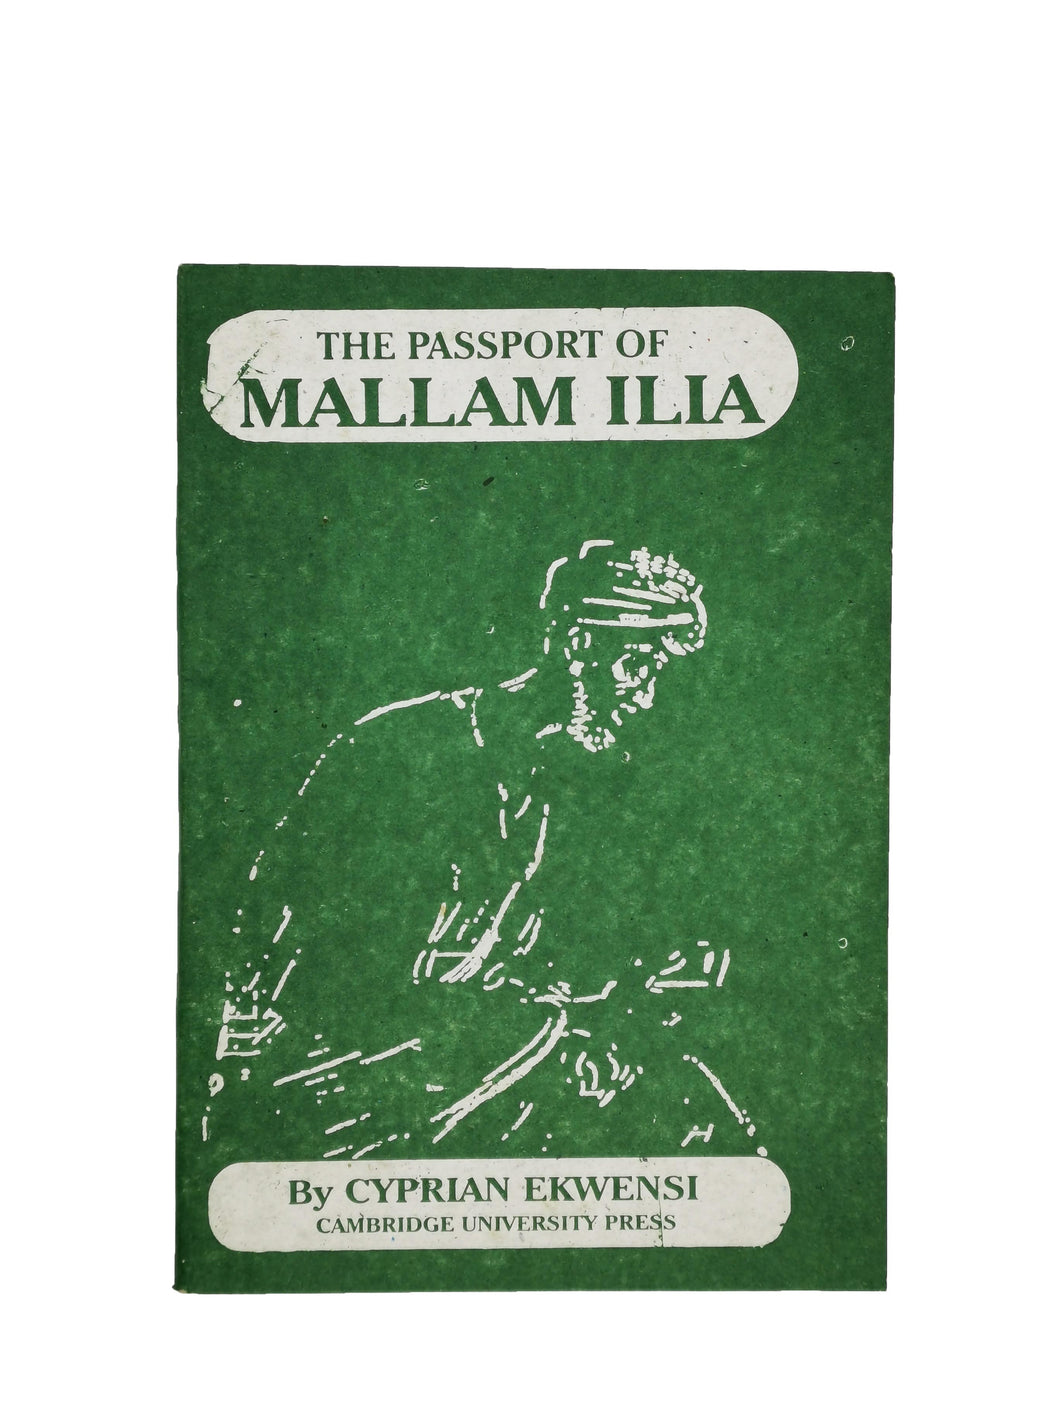 The passport of mallam lai